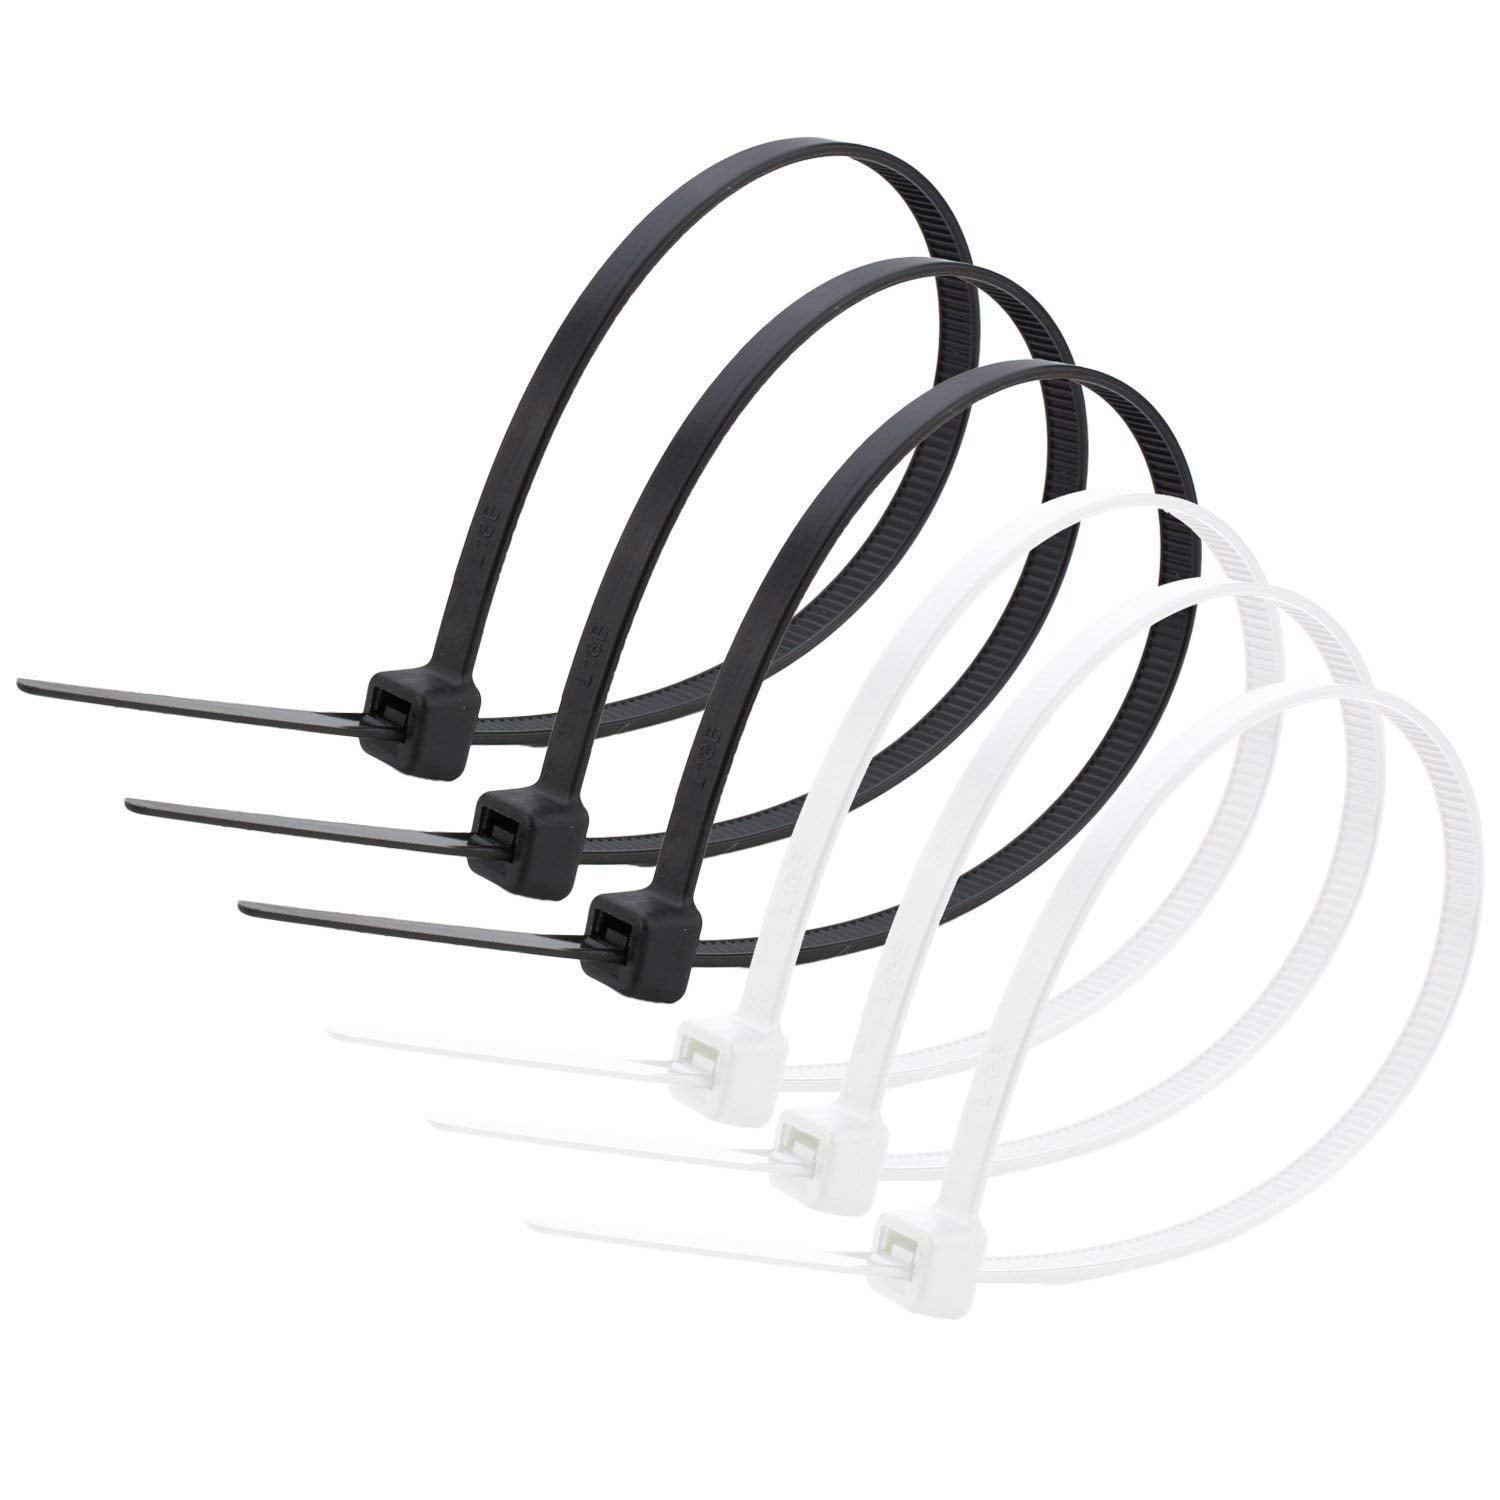 Cable Zip Ties Reusable Adjustable Nylon 100 6-inch Natural Double Loop Tie 